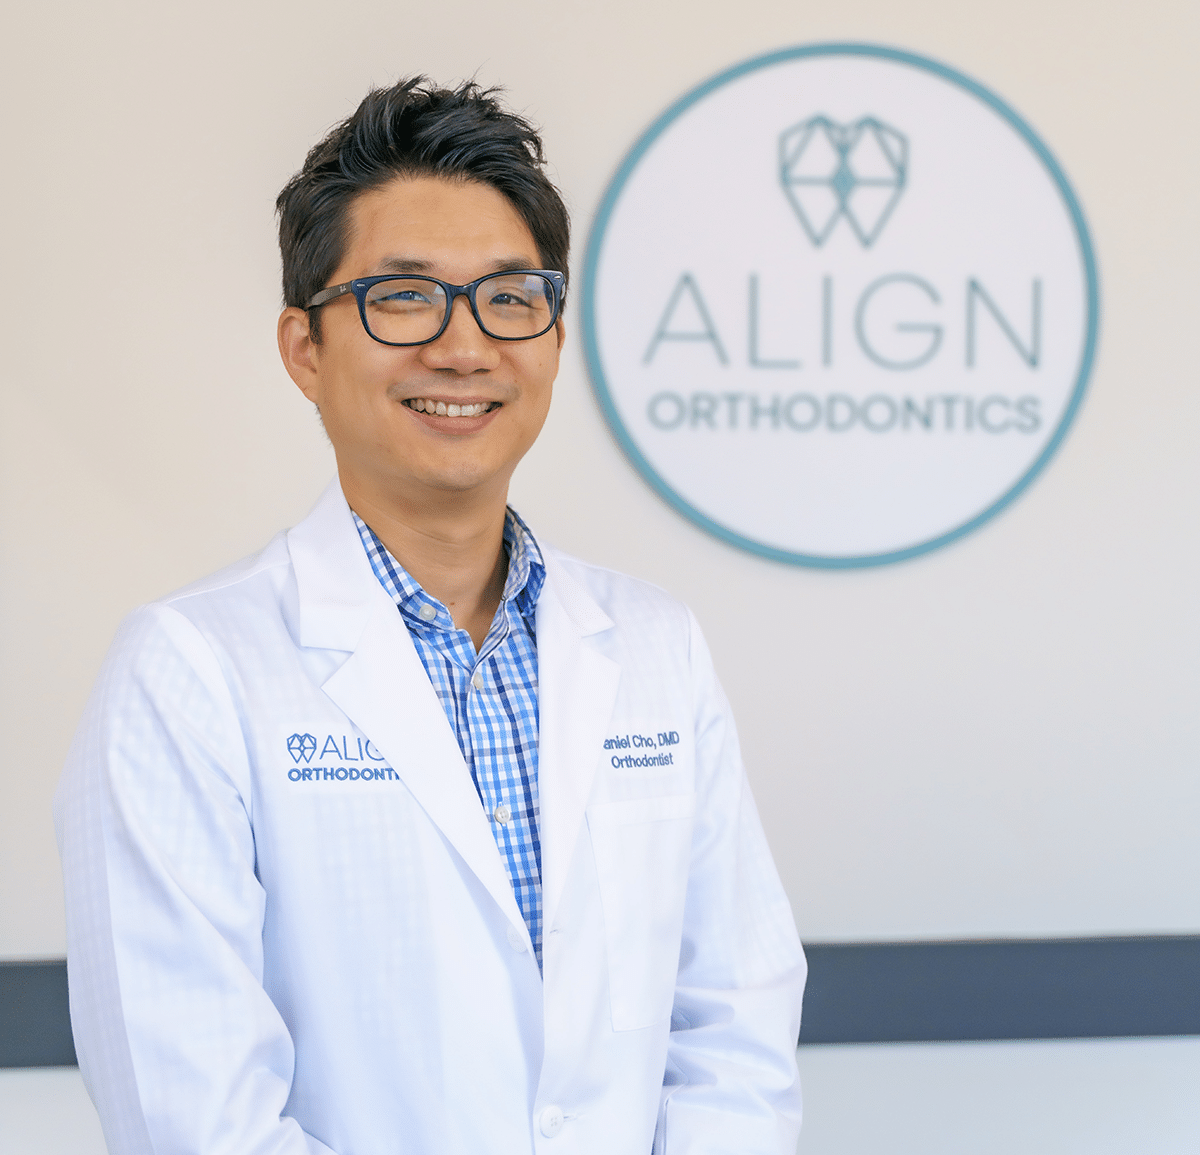 Dr. Daniel Cho at Align Orthodontics in Suwanee, GA